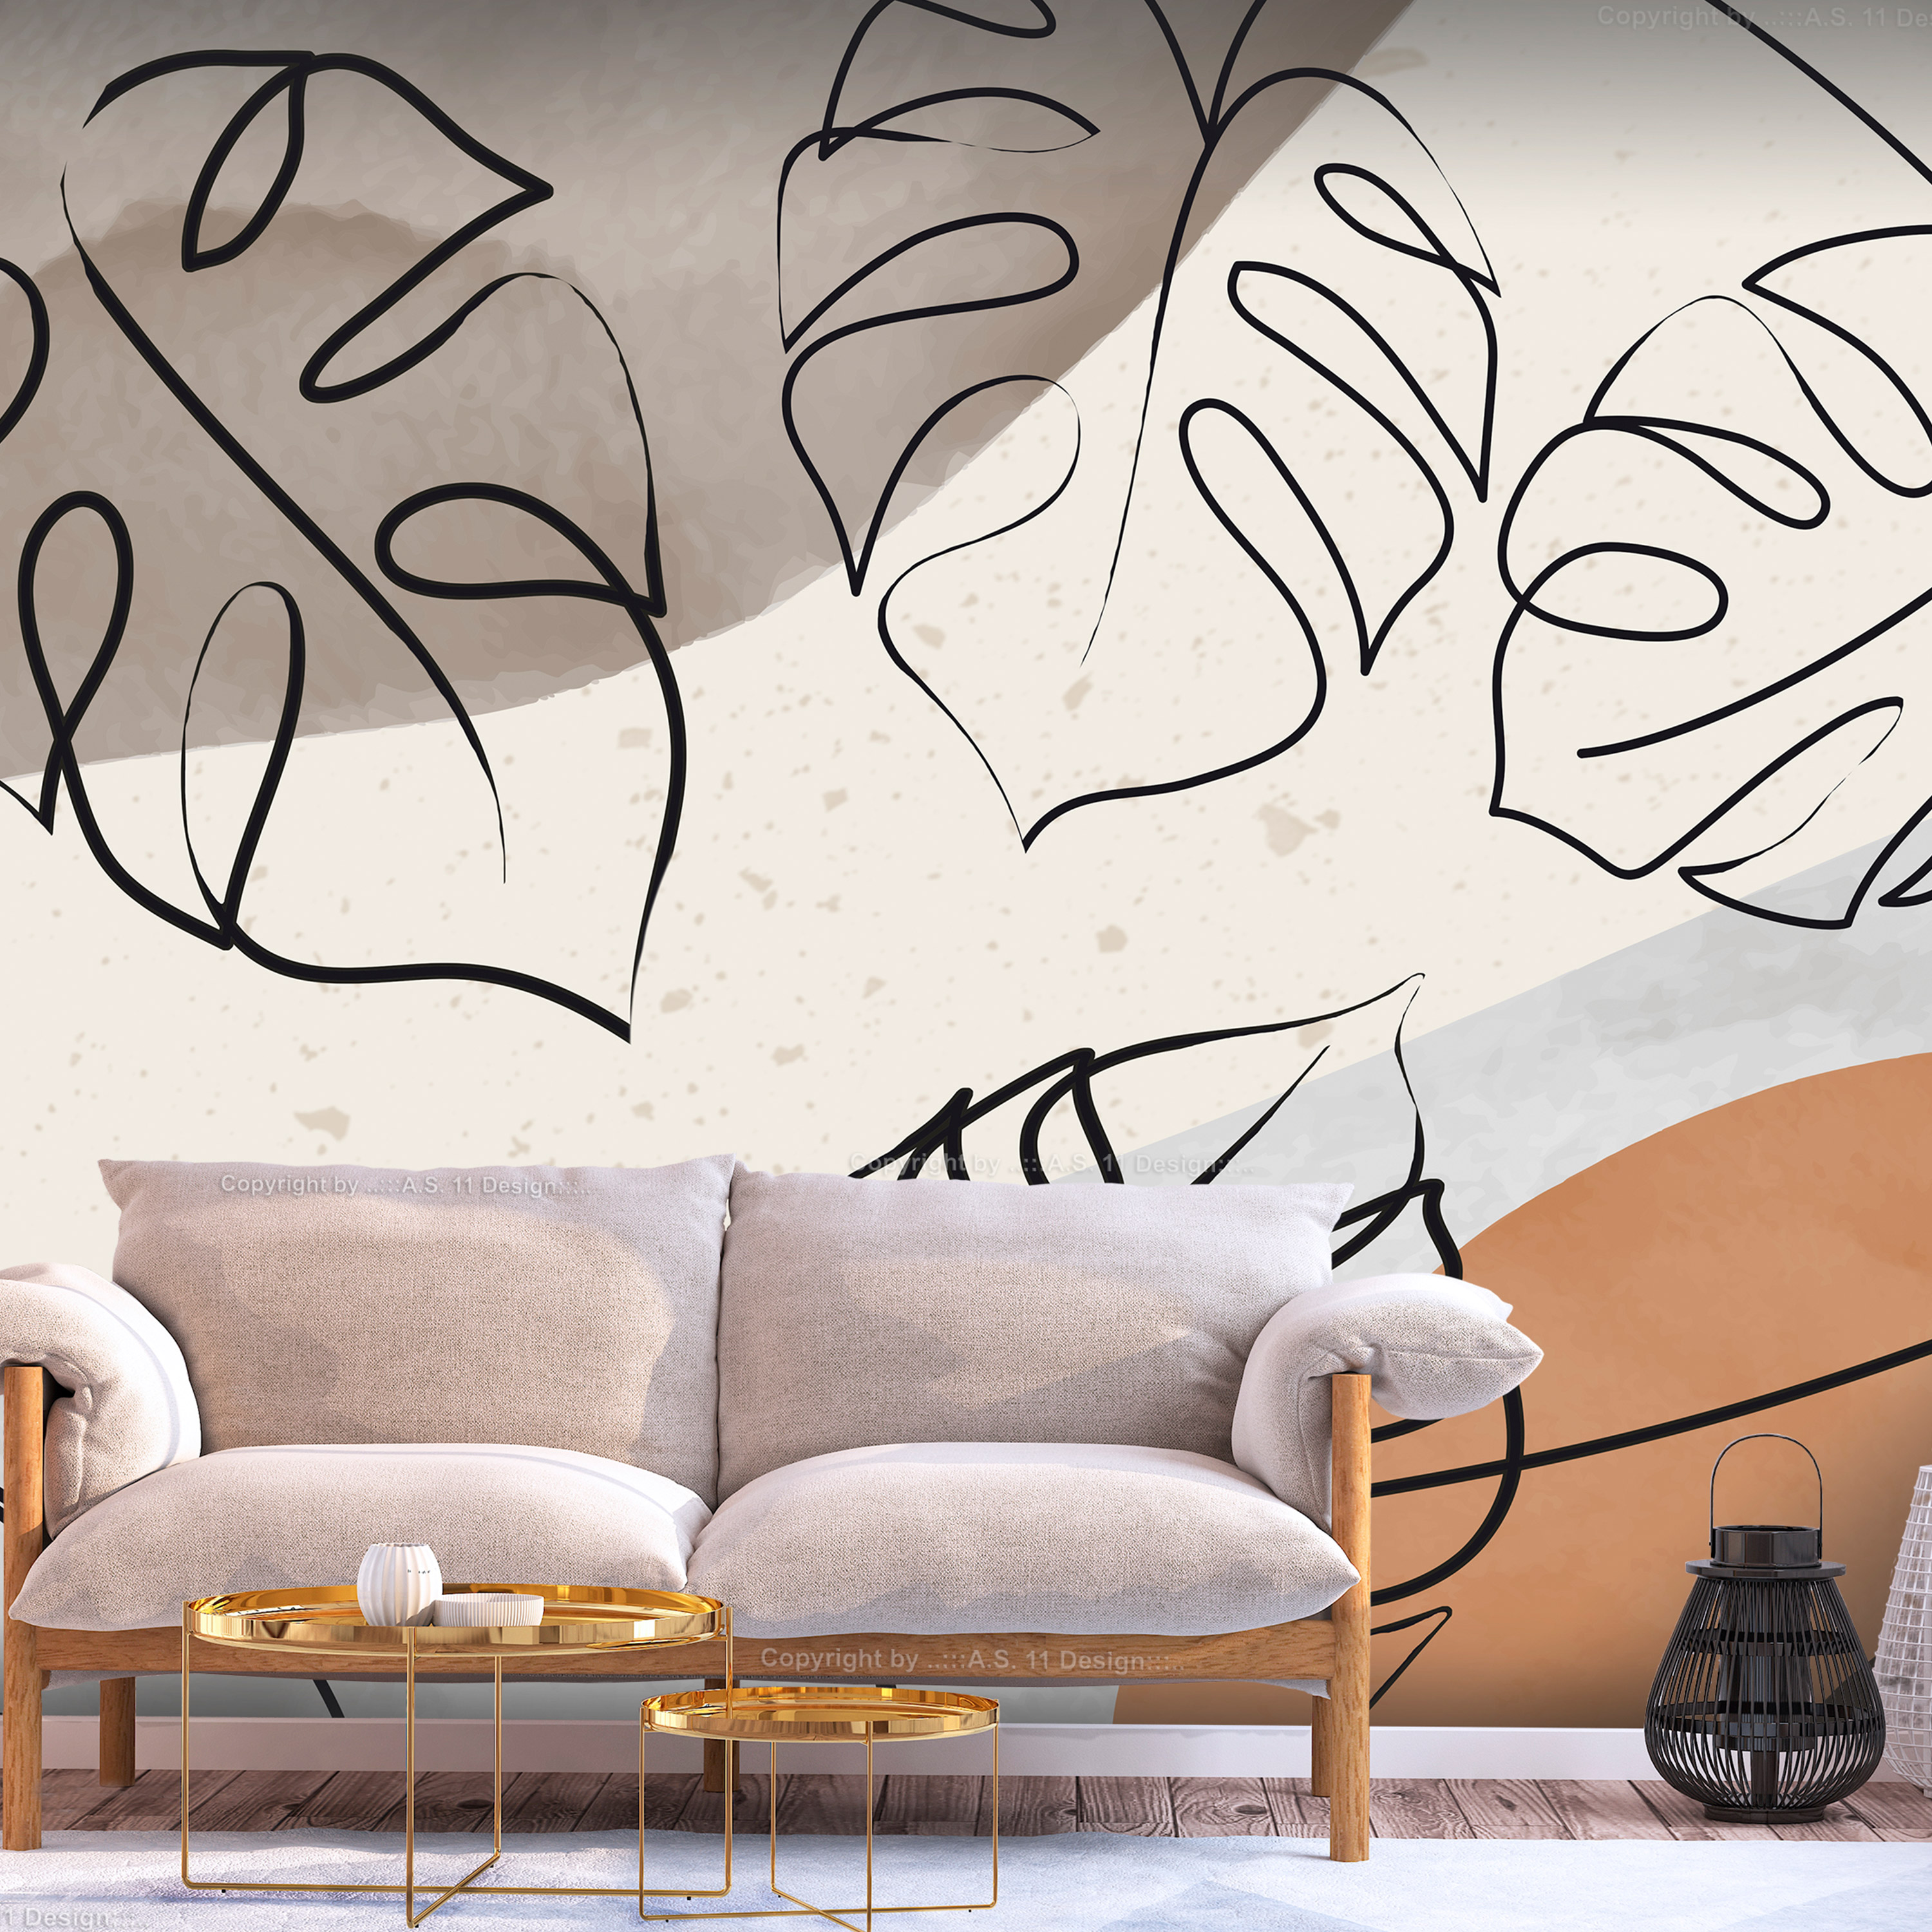 Wallpaper - Minimalistic Monstera Leaves - 150x105